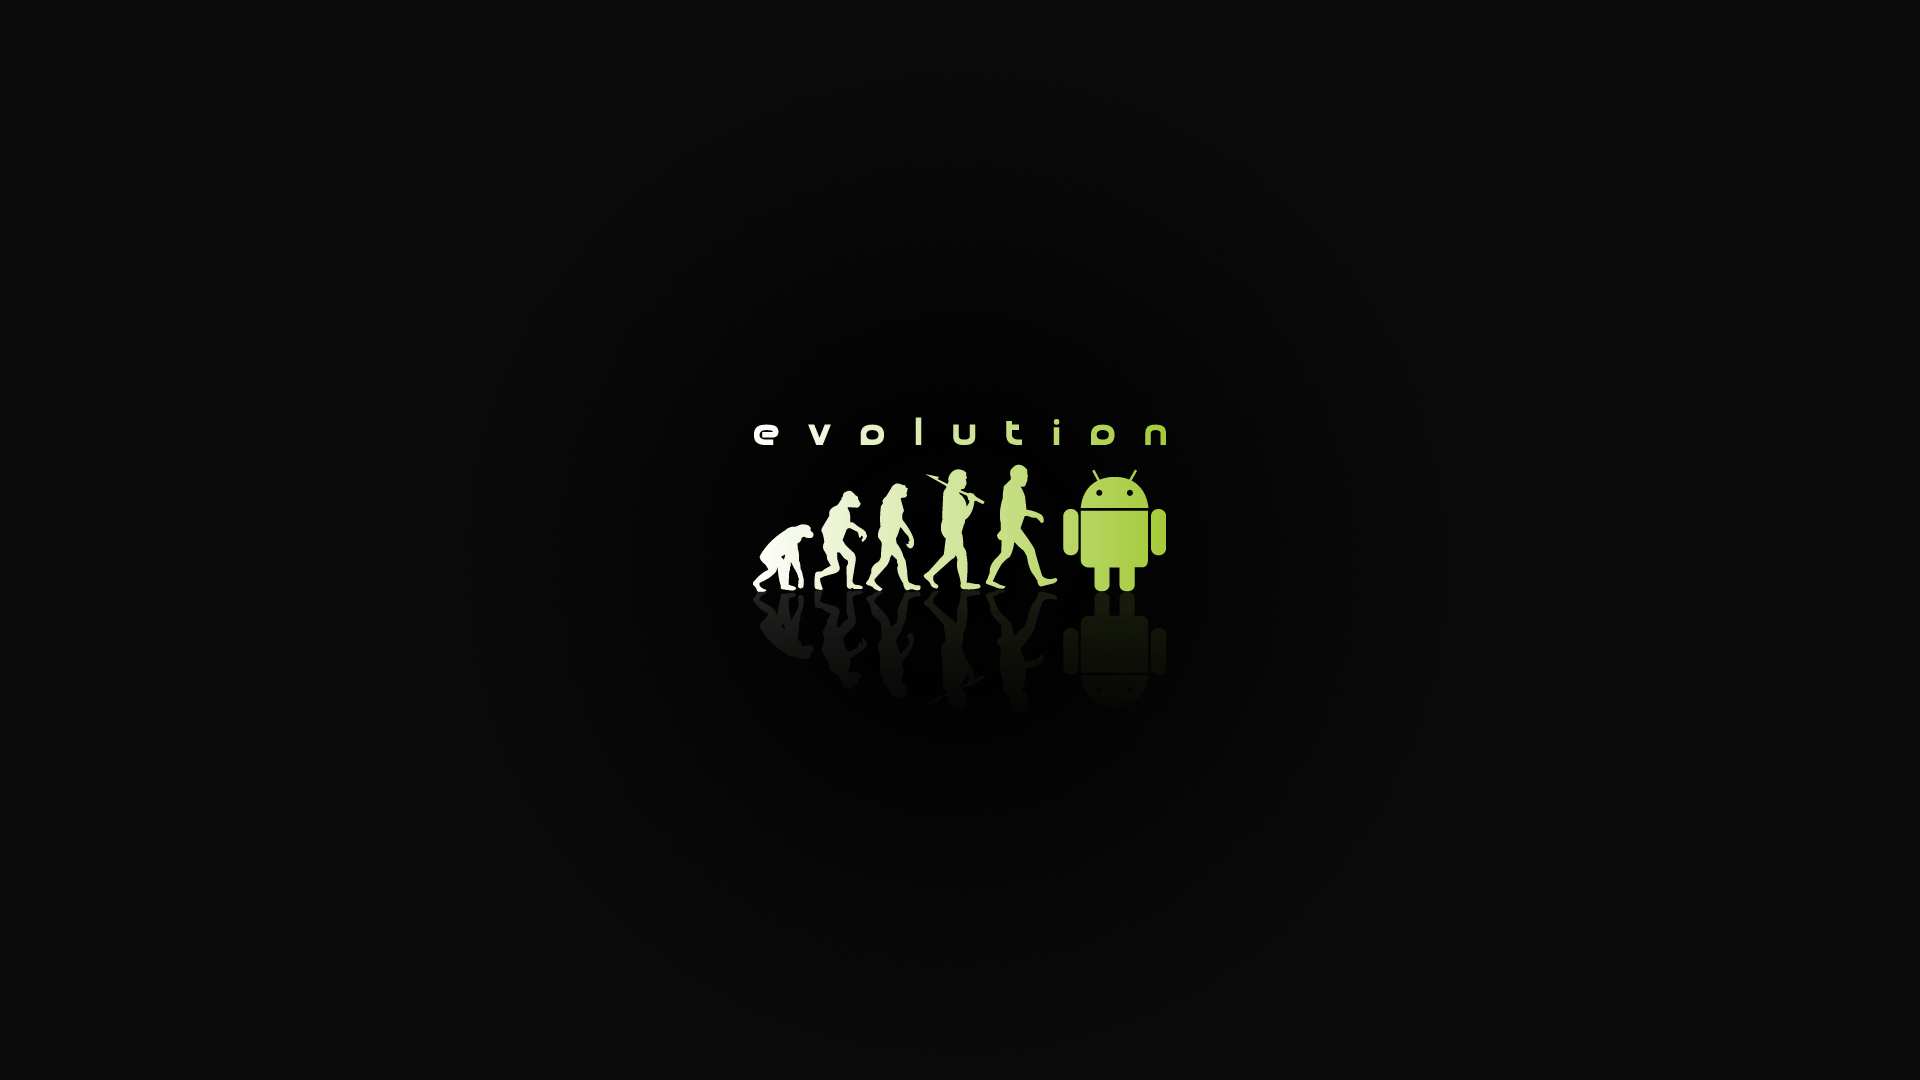 Evolution Android Wallpaper For Desktop Wallpaper. Cool